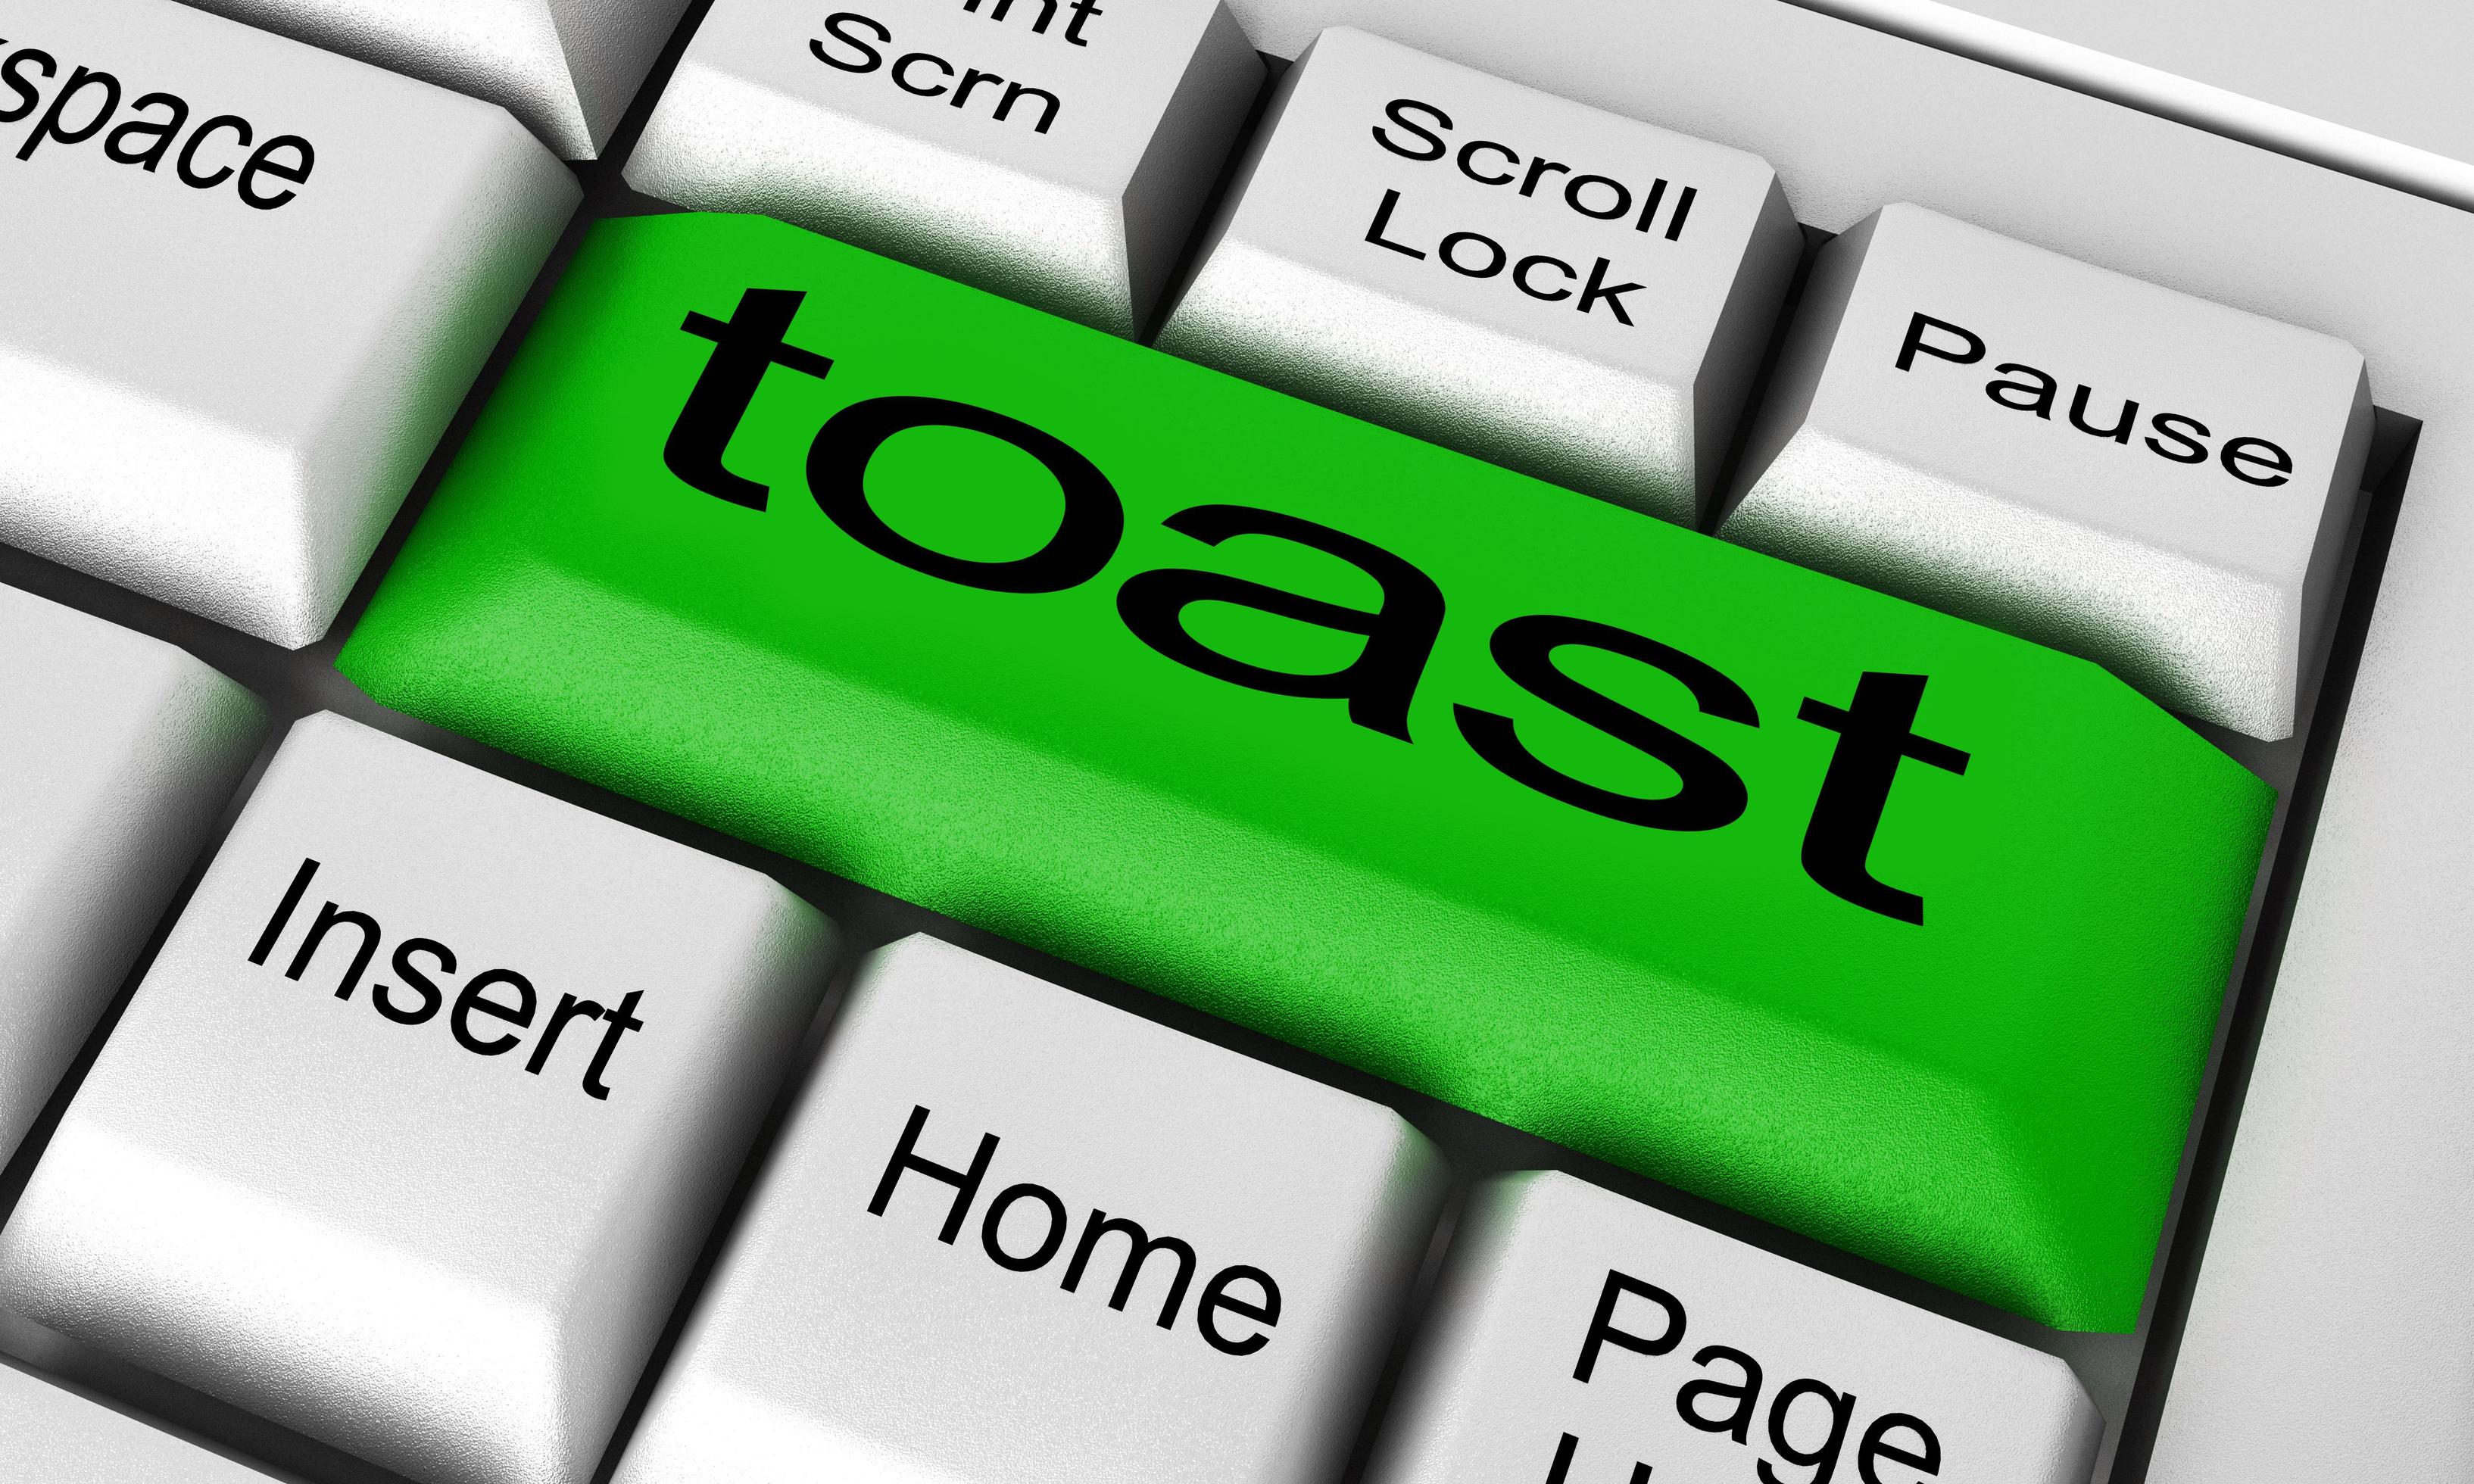 toast-word-on-keyboard-button-free-photo.jpg